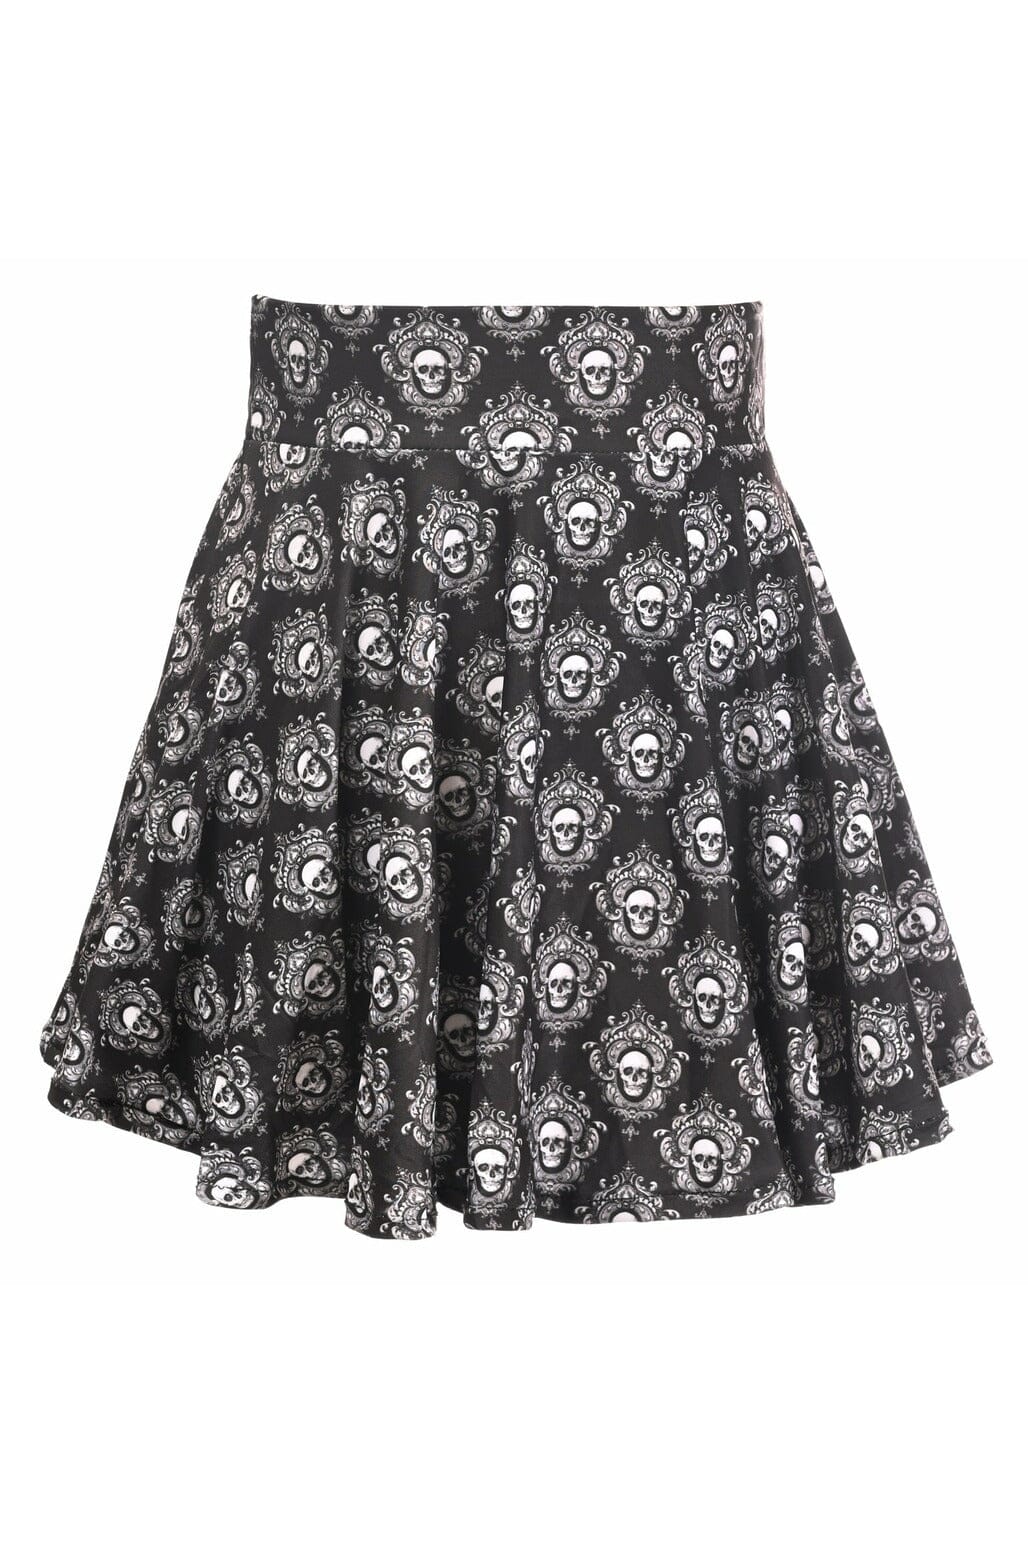 Black & White Skulls Stretch Lycra Skirt-Costume Skirts-Daisy Corsets-Black-XS-SEXYSHOES.COM